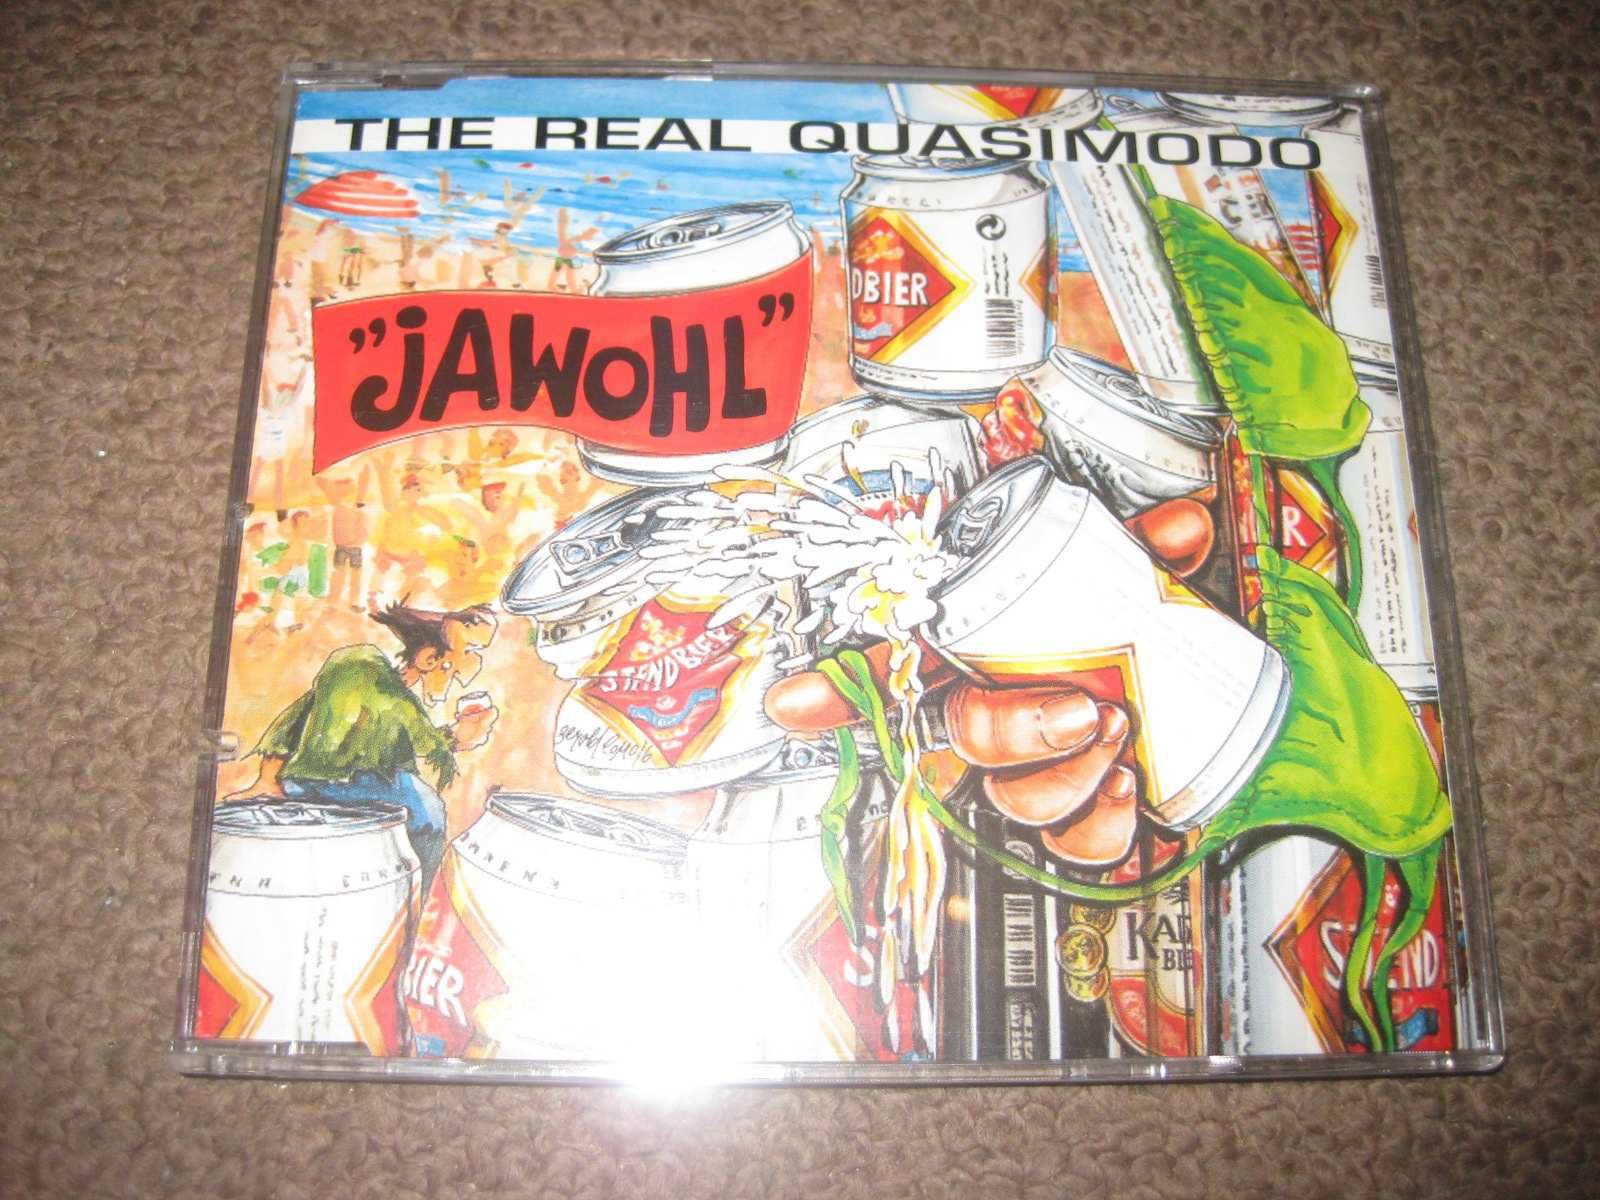 CD Single dos The Real Quasimodo "Jawohl"